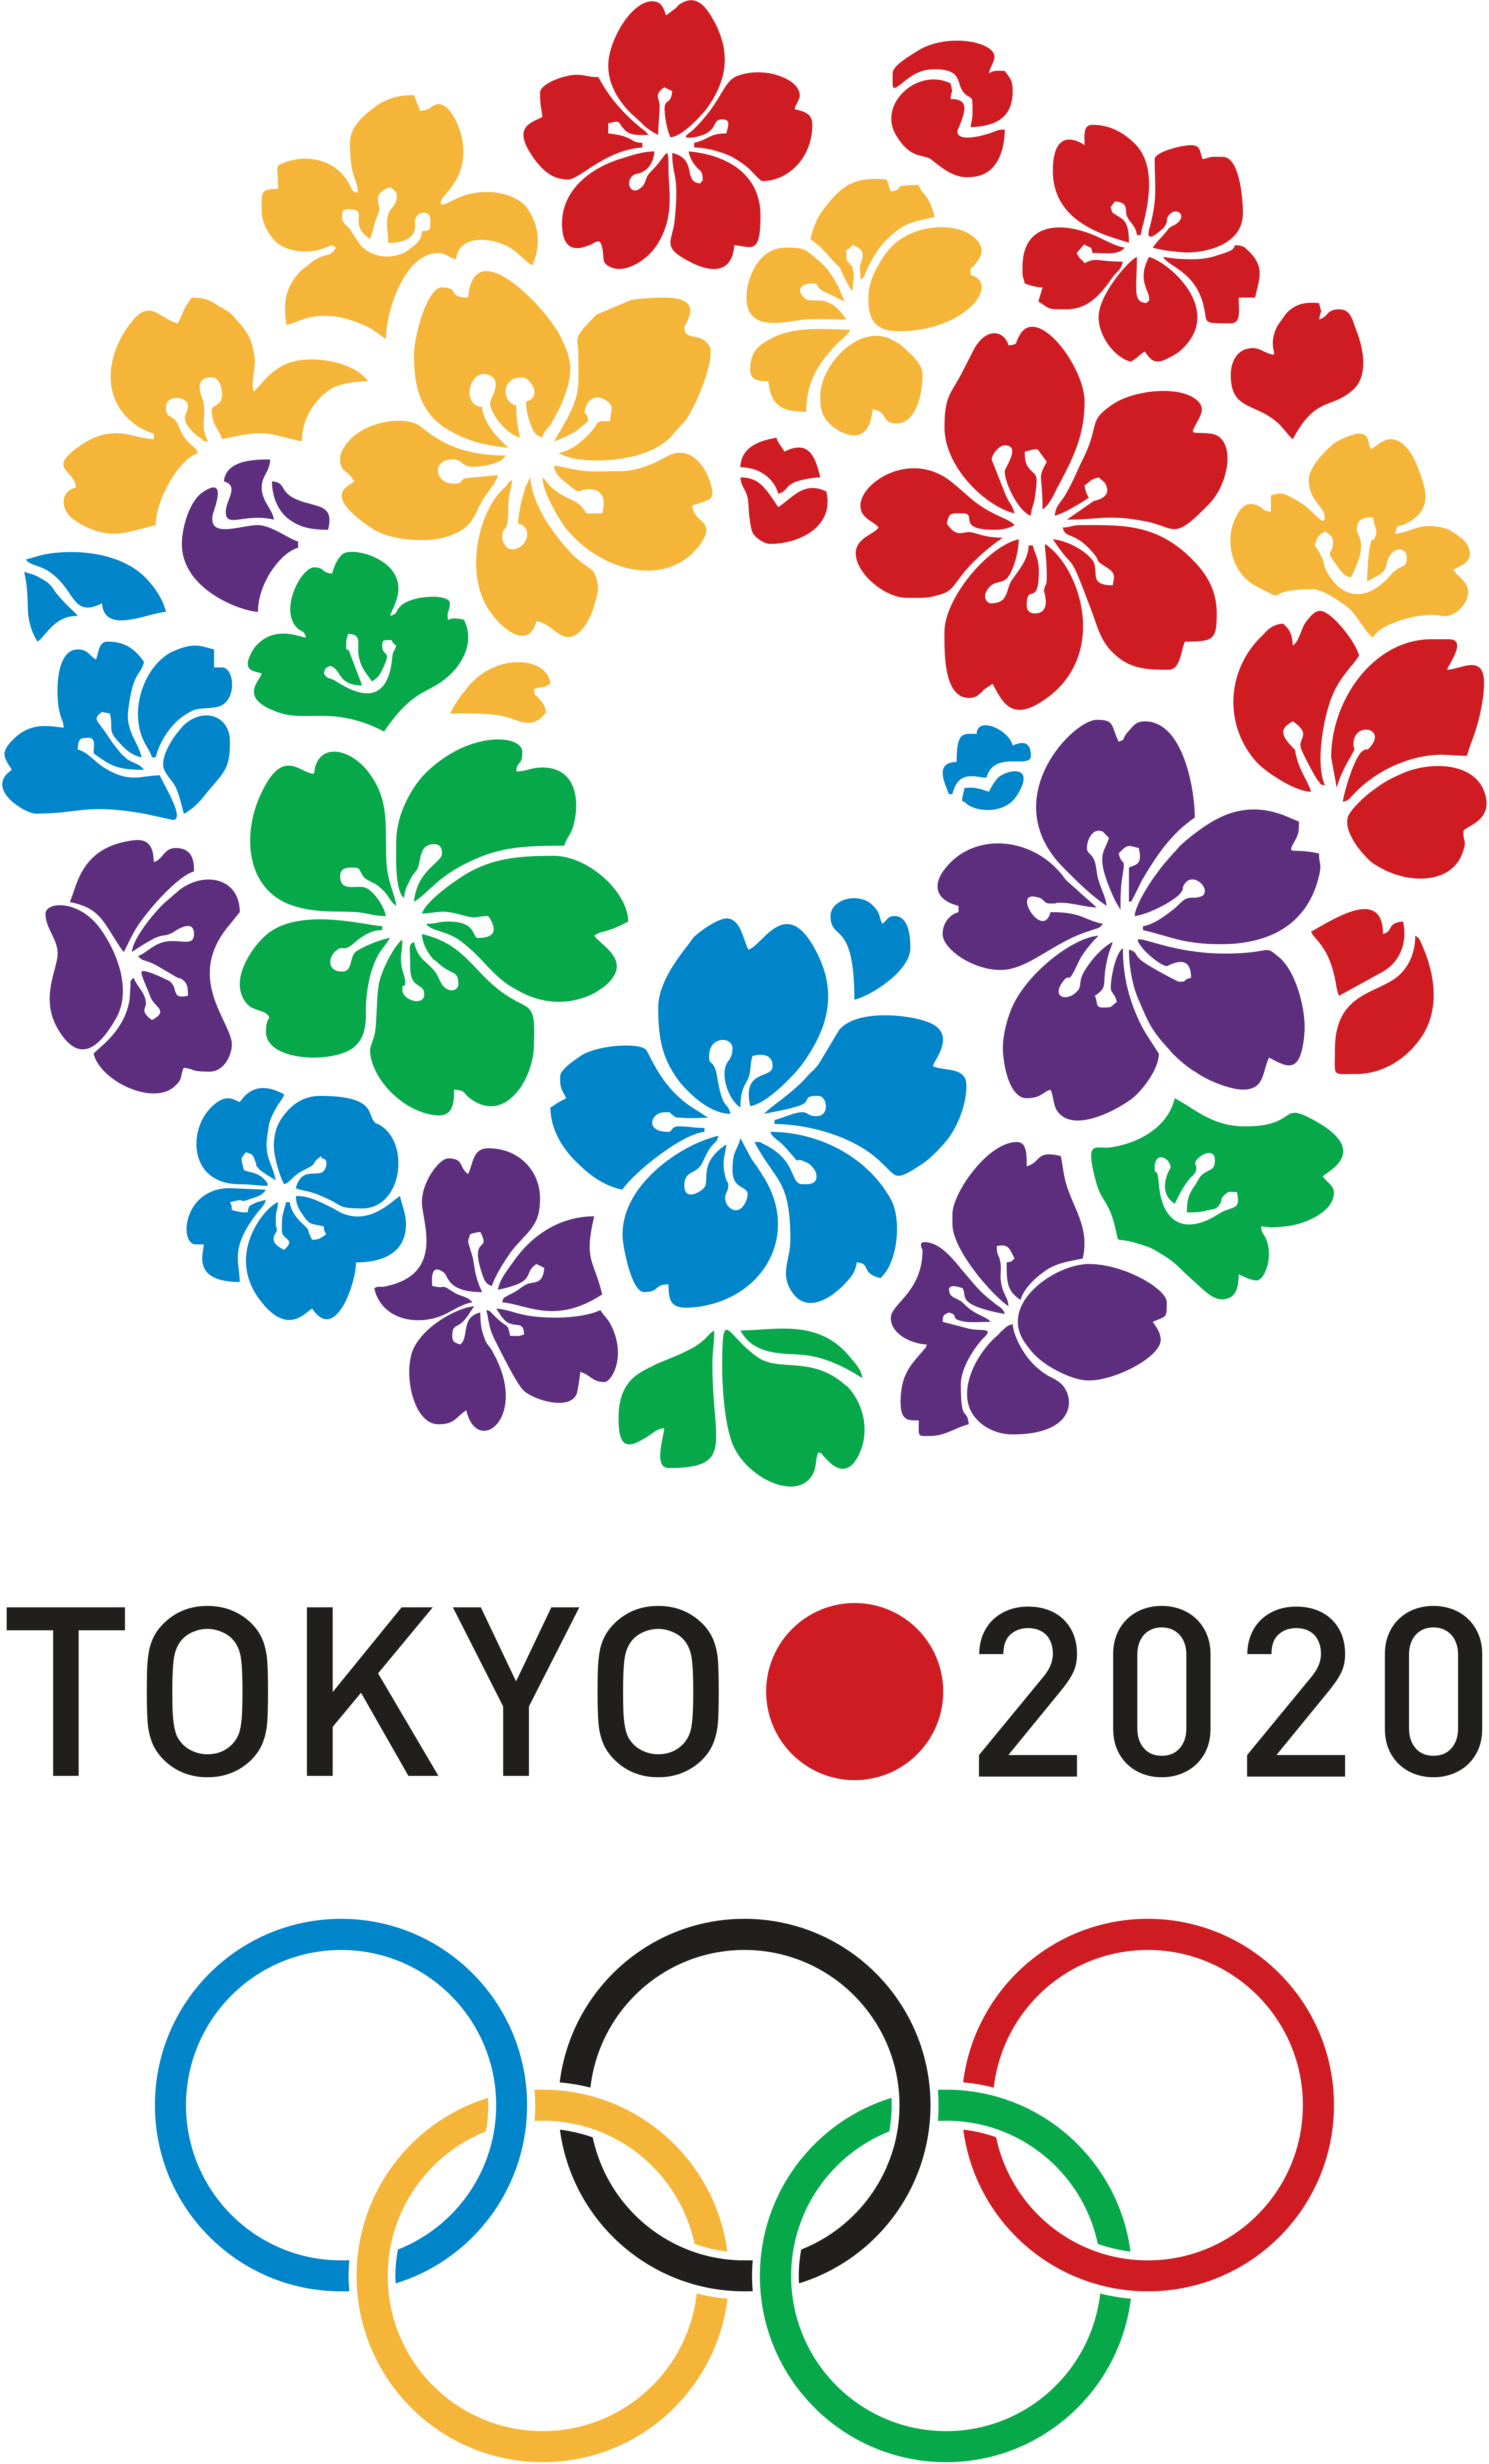 Tokyo 2020 Olympics Logo Download